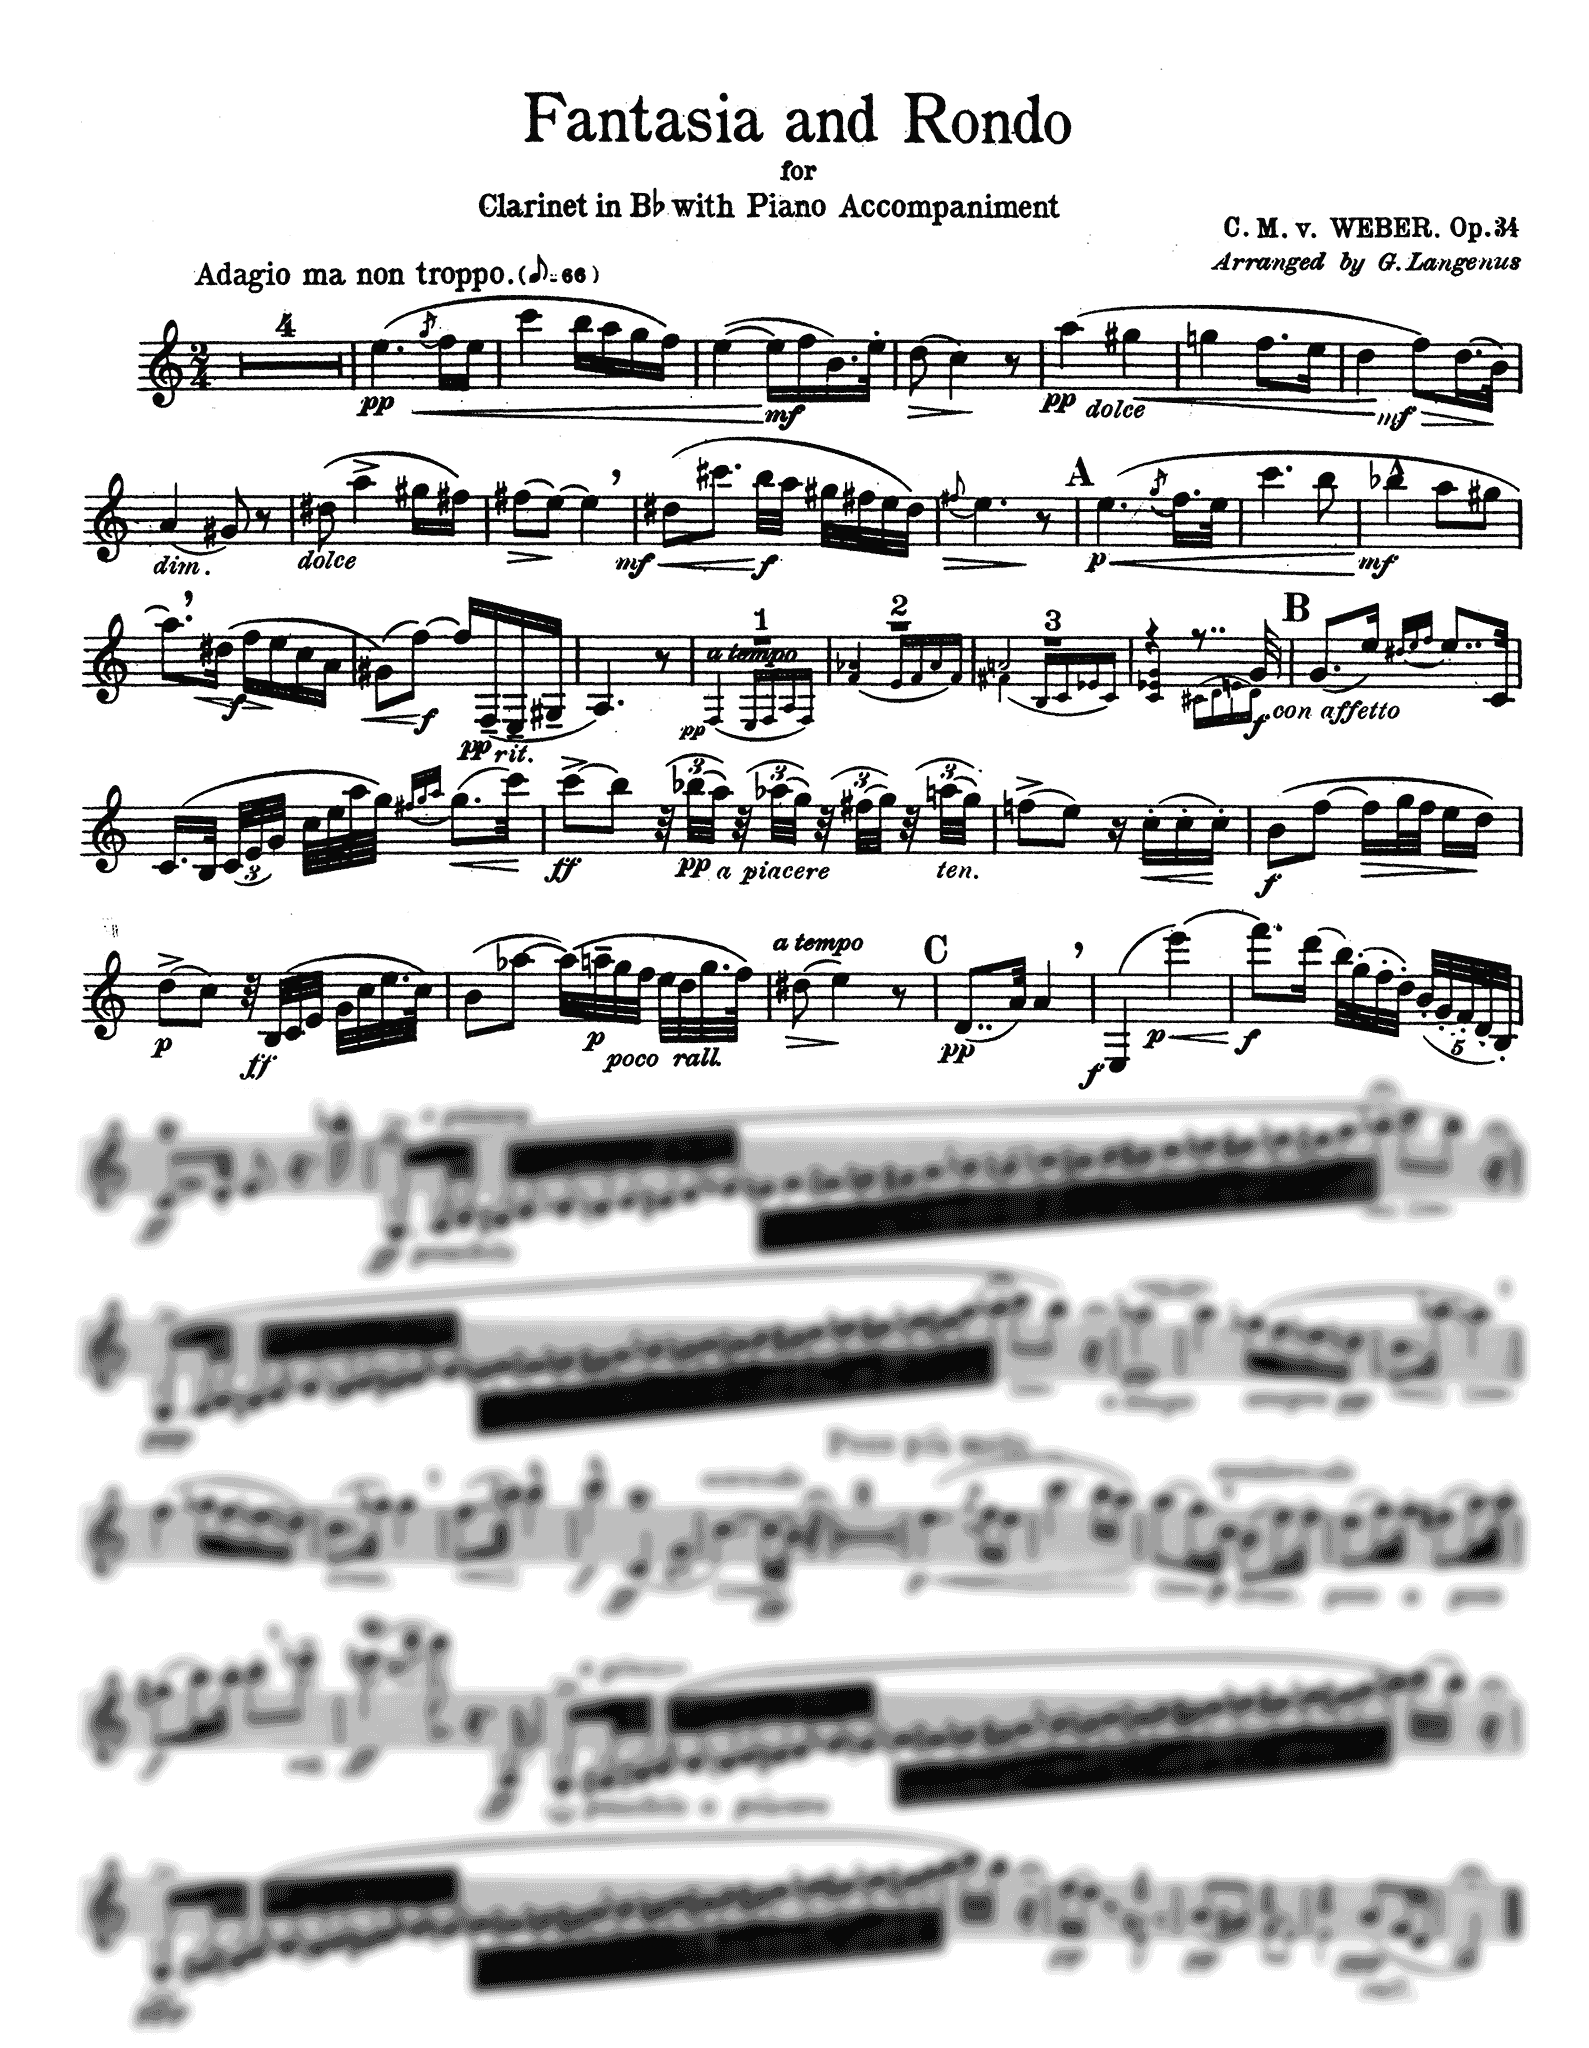 Weber Fantasia & Rondo from Quintet, Op. 34 Clarinet part